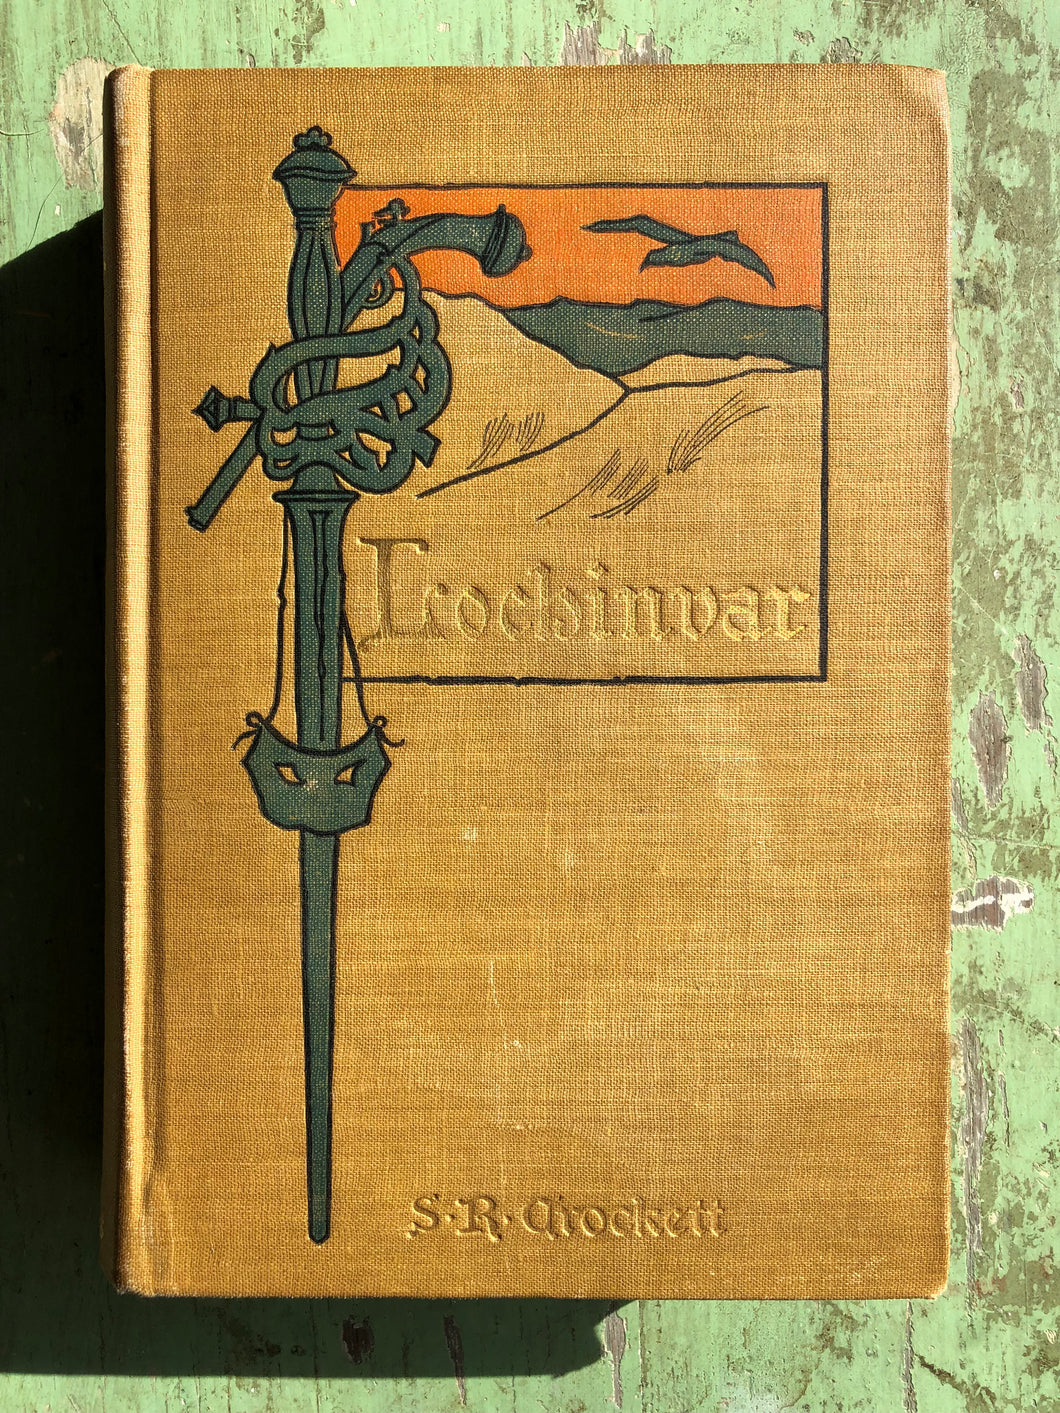 Lochinvar: A Novel by S. R. Crockett